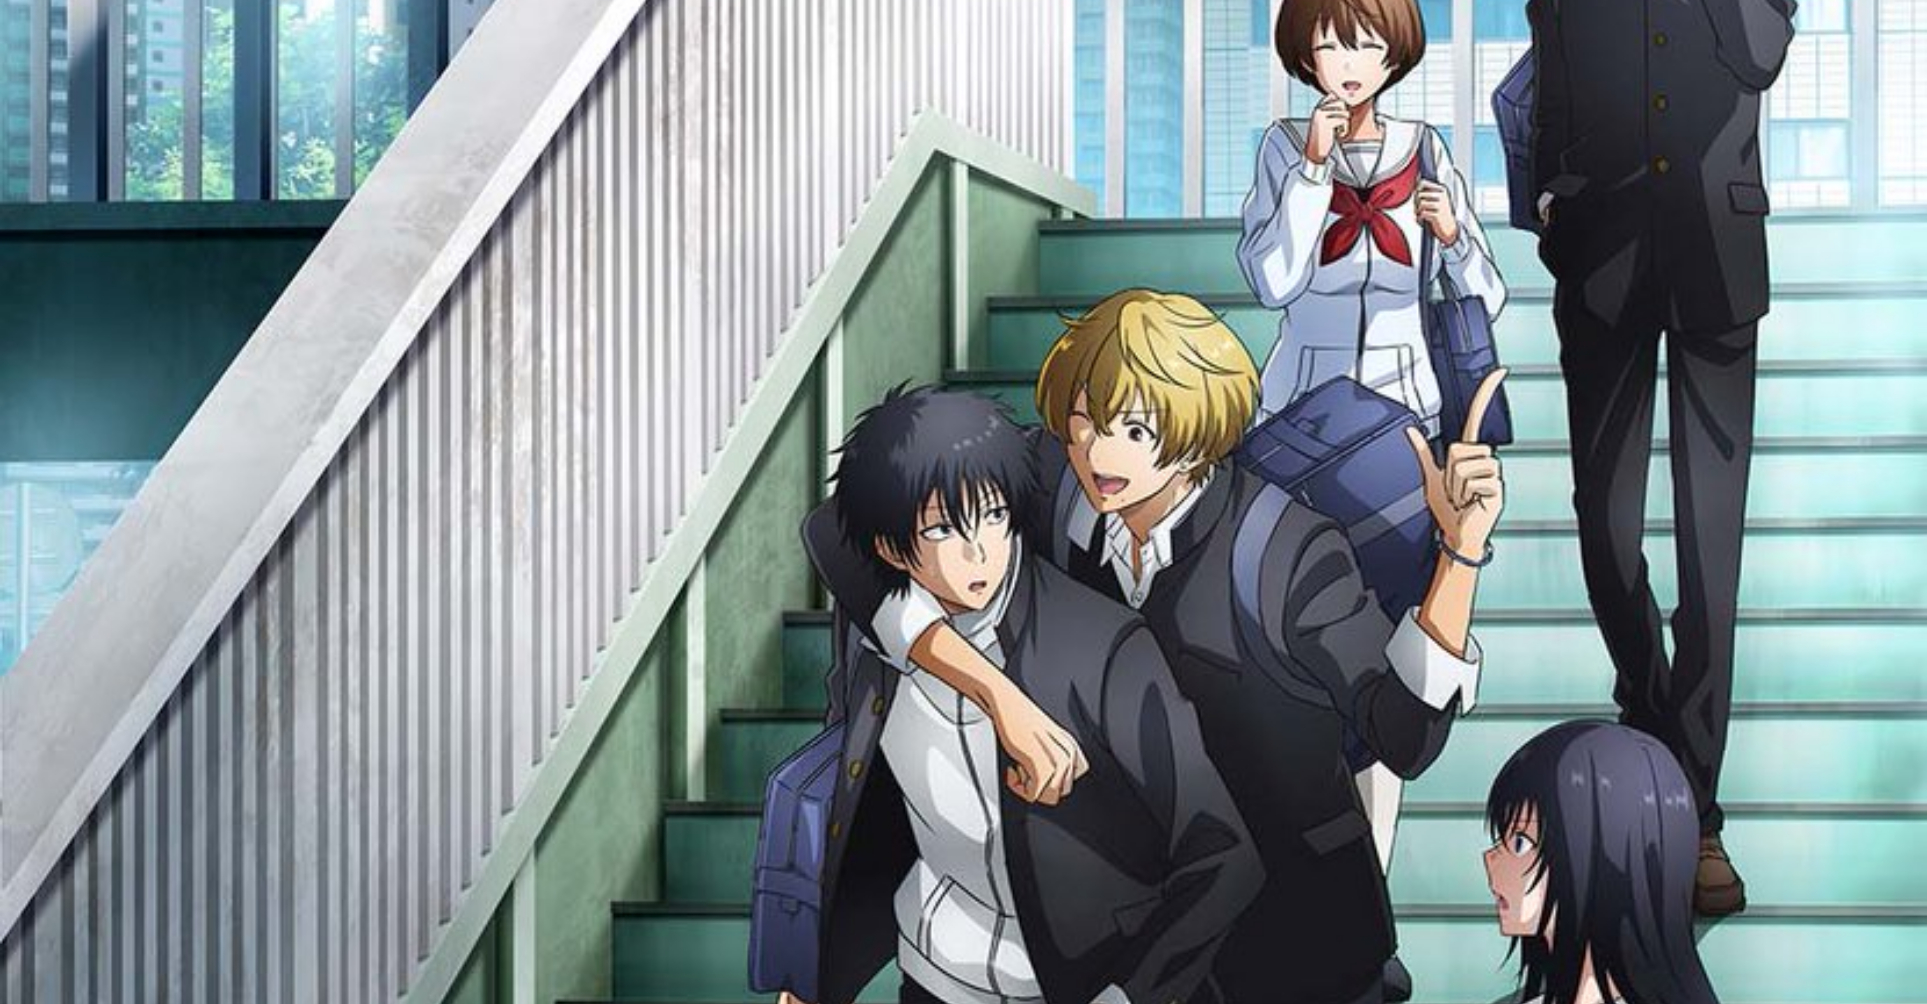 Tomodachi Game Anime Set For April 2022 - Anime Corner